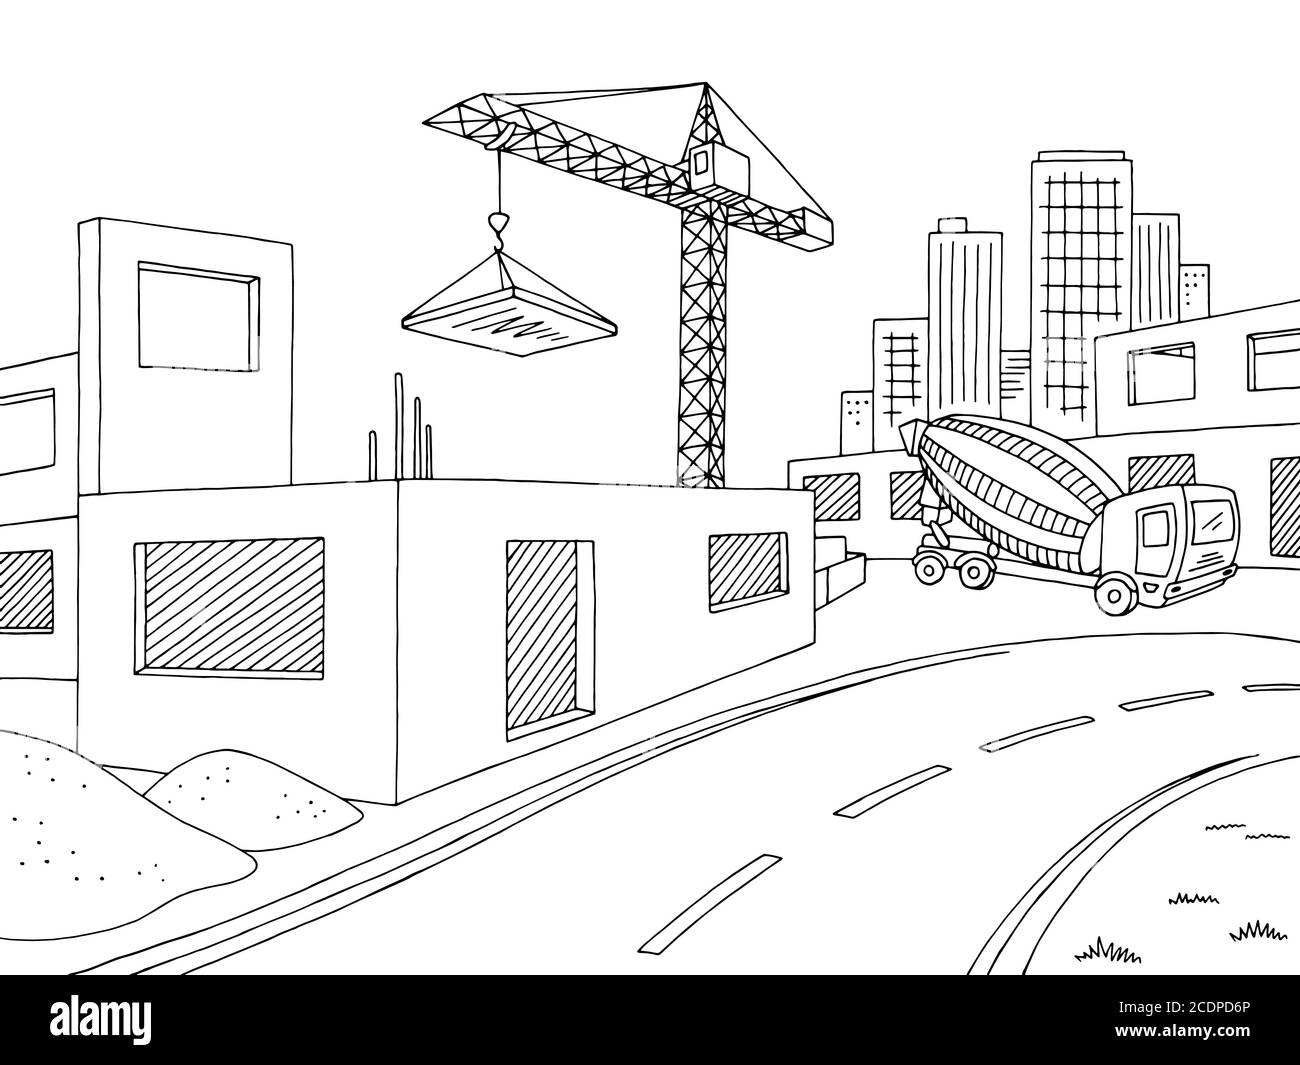 Gebäude Bau Grafik schwarz weiß Stadt Landschaft Skizze Illustration Vektor Stock Vektor